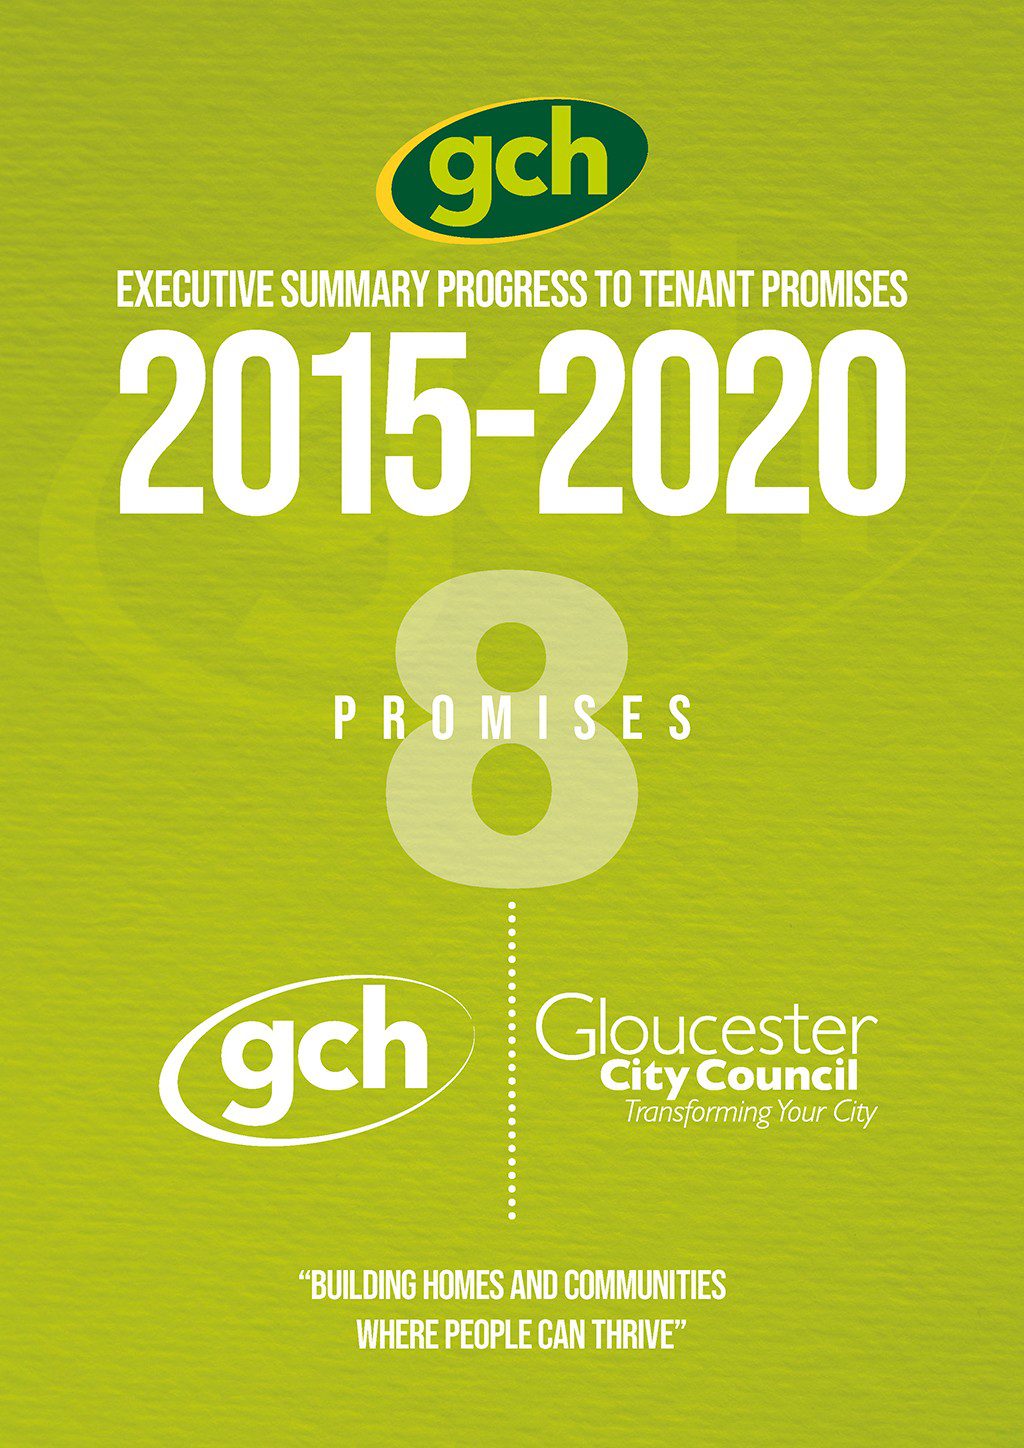 GCH Tenant Promises cover